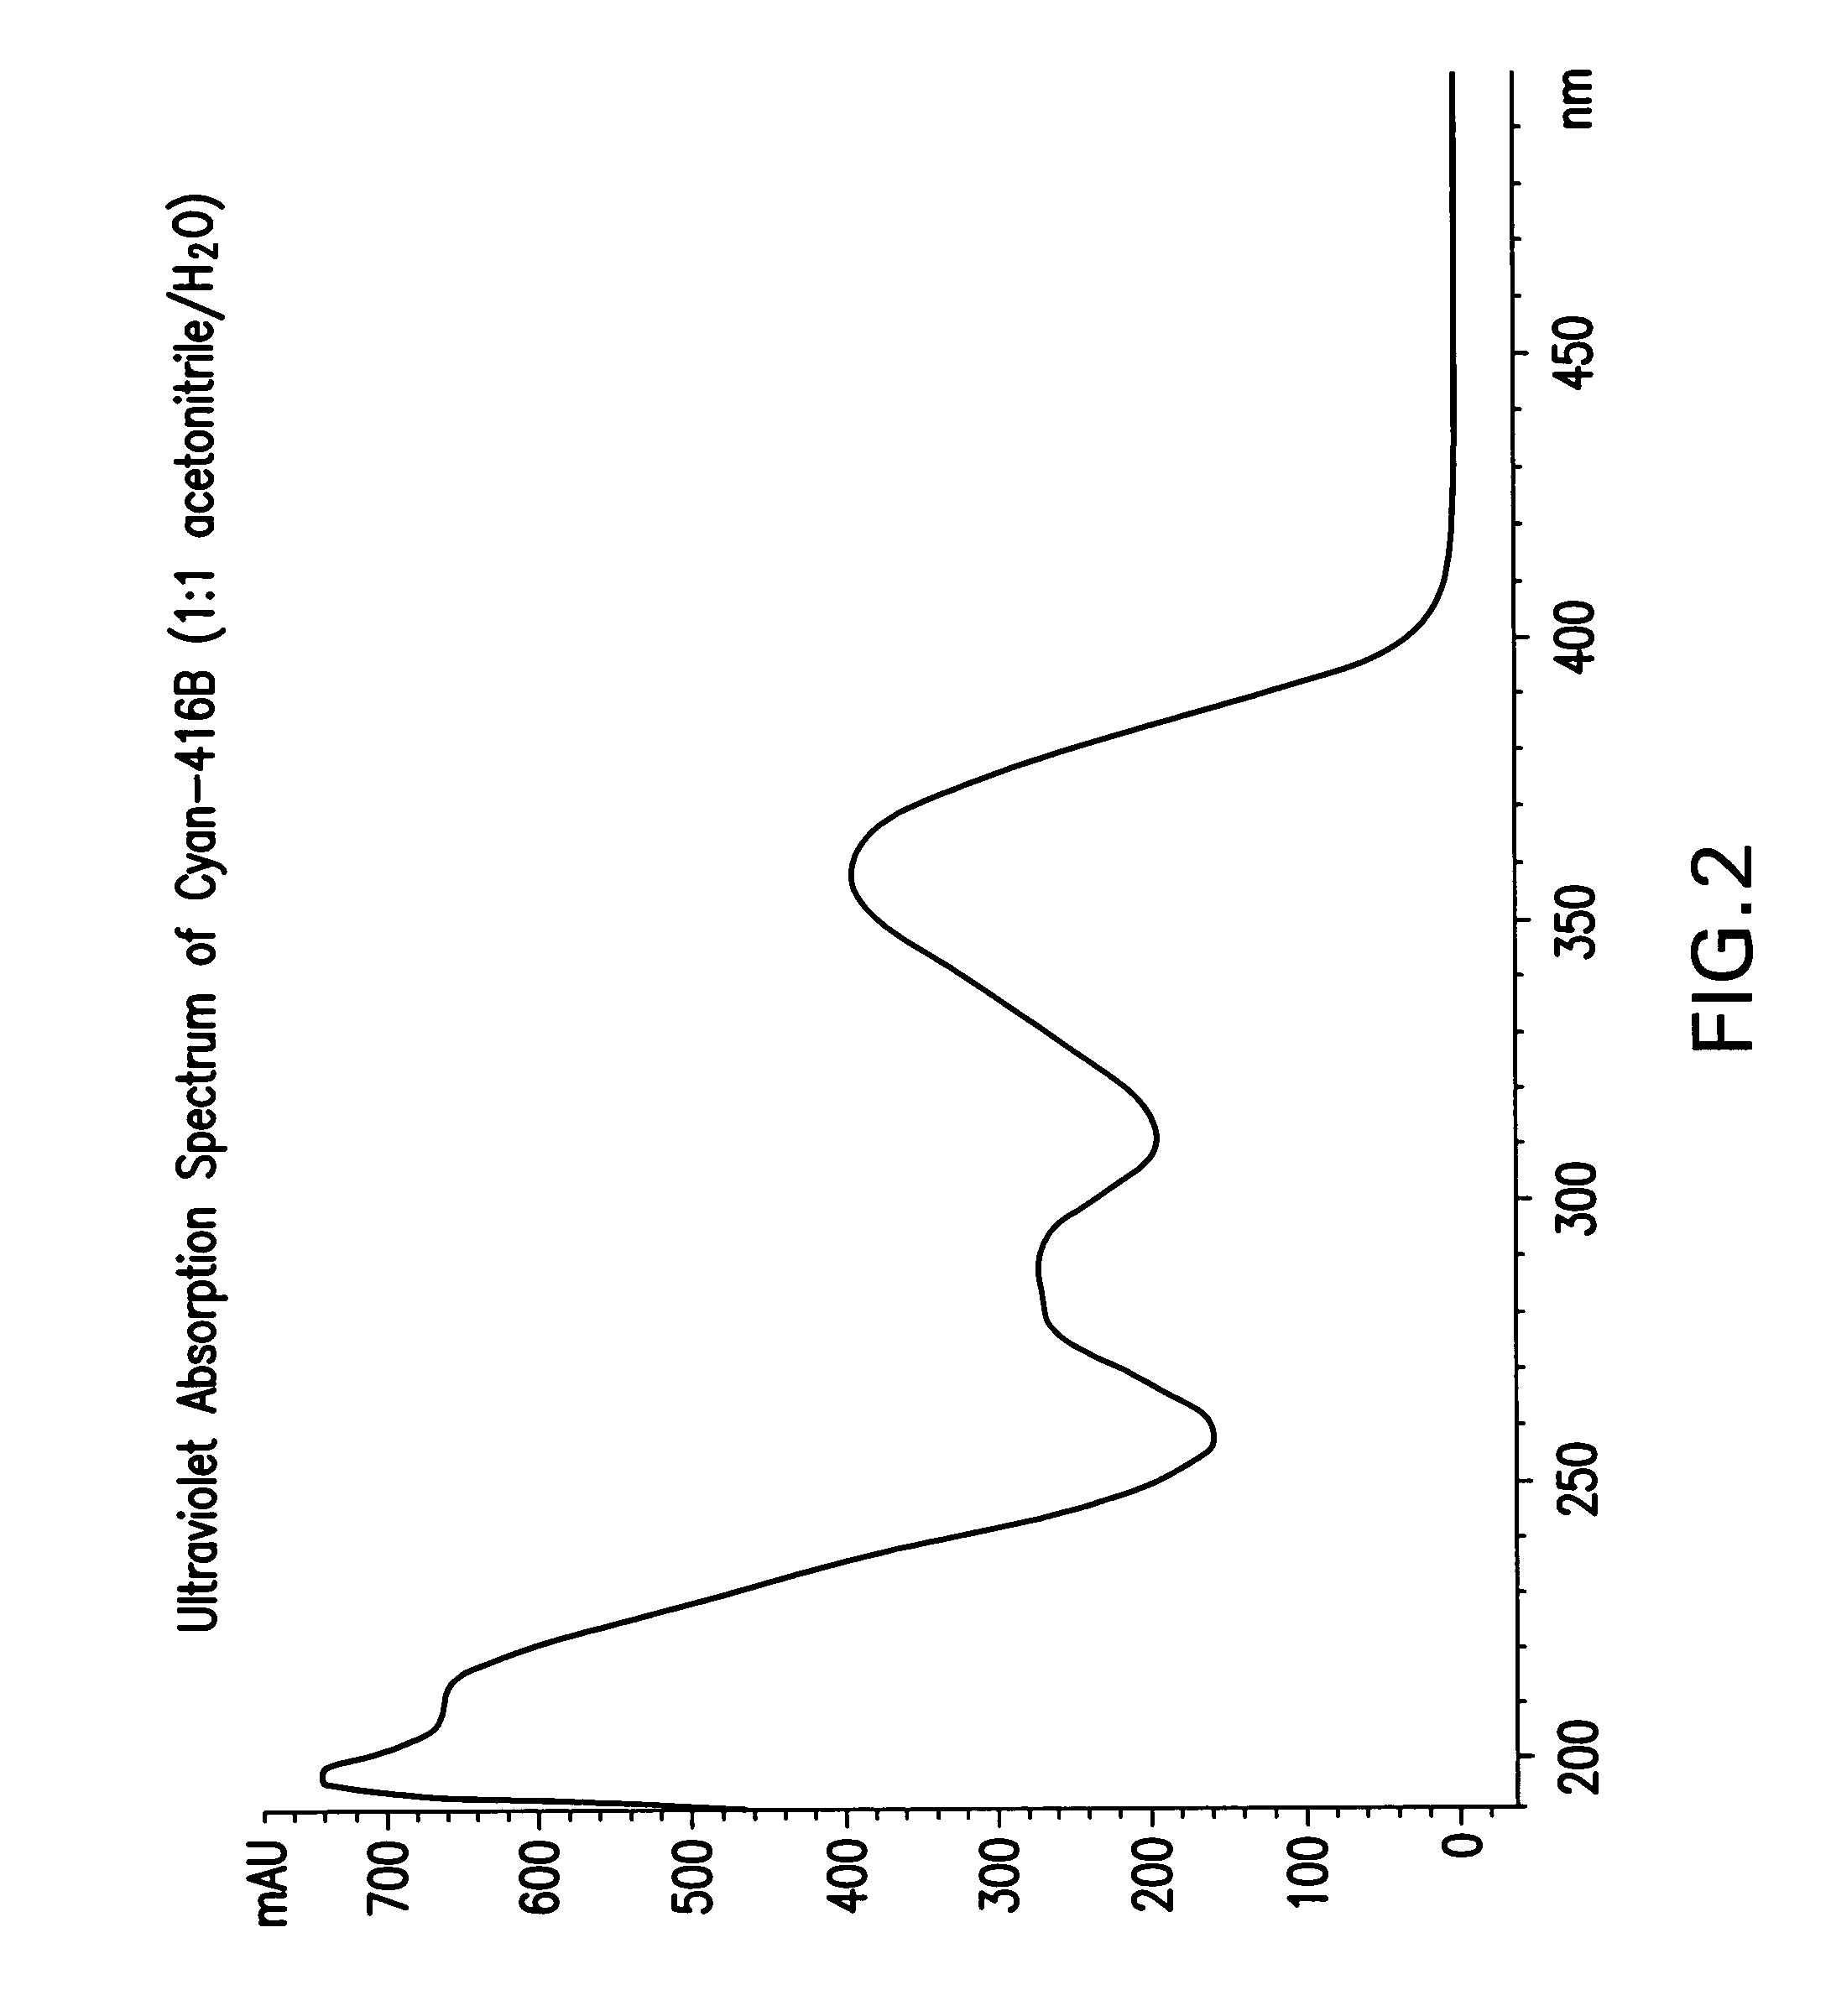 Antibiotics Cyan-416 A, Cyan-416 B, Cyan-416 C, Cyan-416 D and Cyan-416 E, and ester derivatives of Cyan-416 B